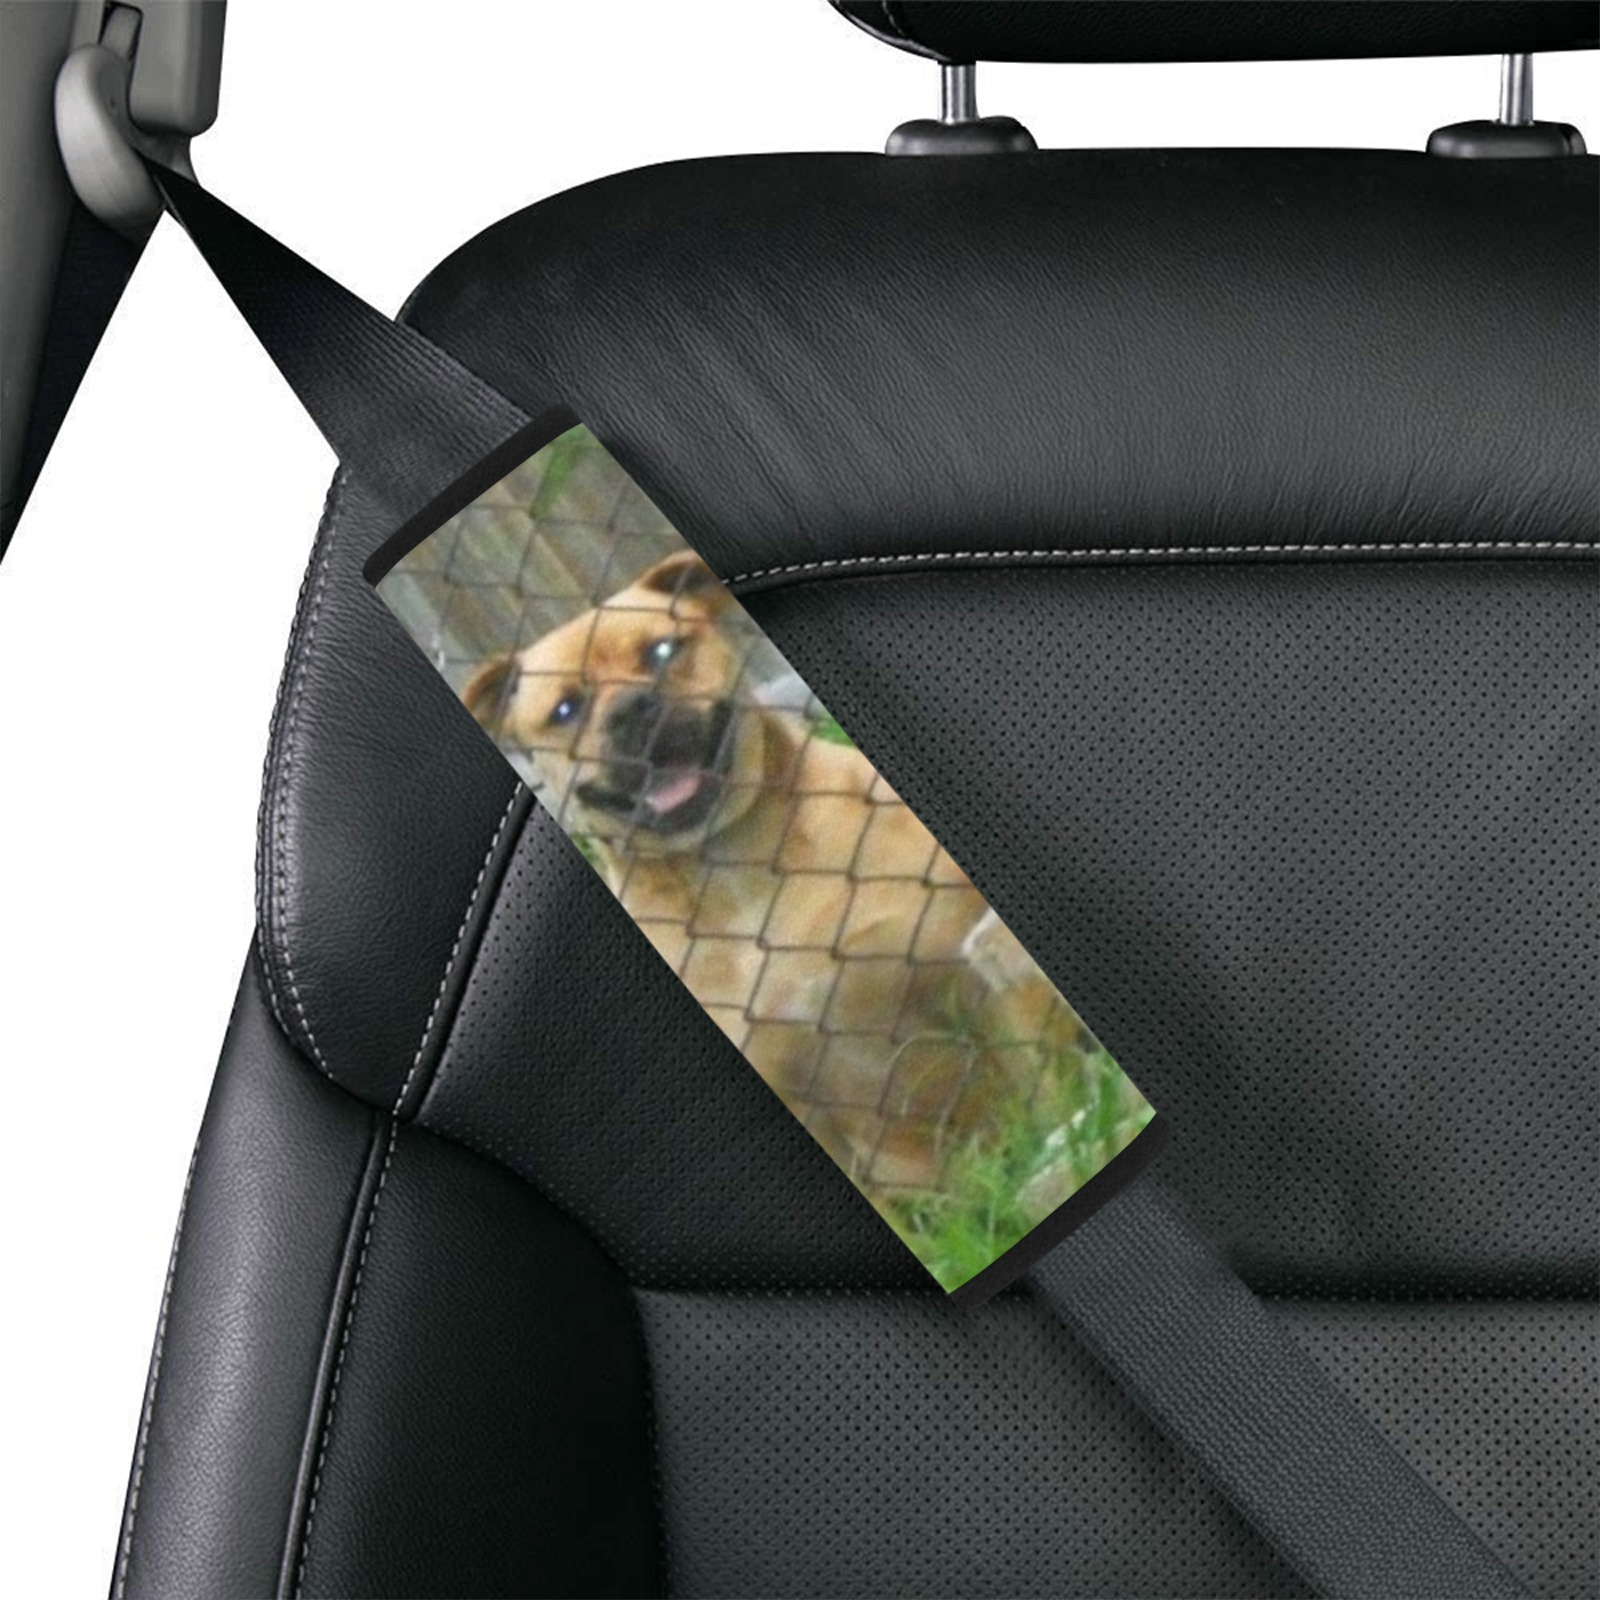 A Smiling Dog Car Seat Belt Cover 7''x12.6''